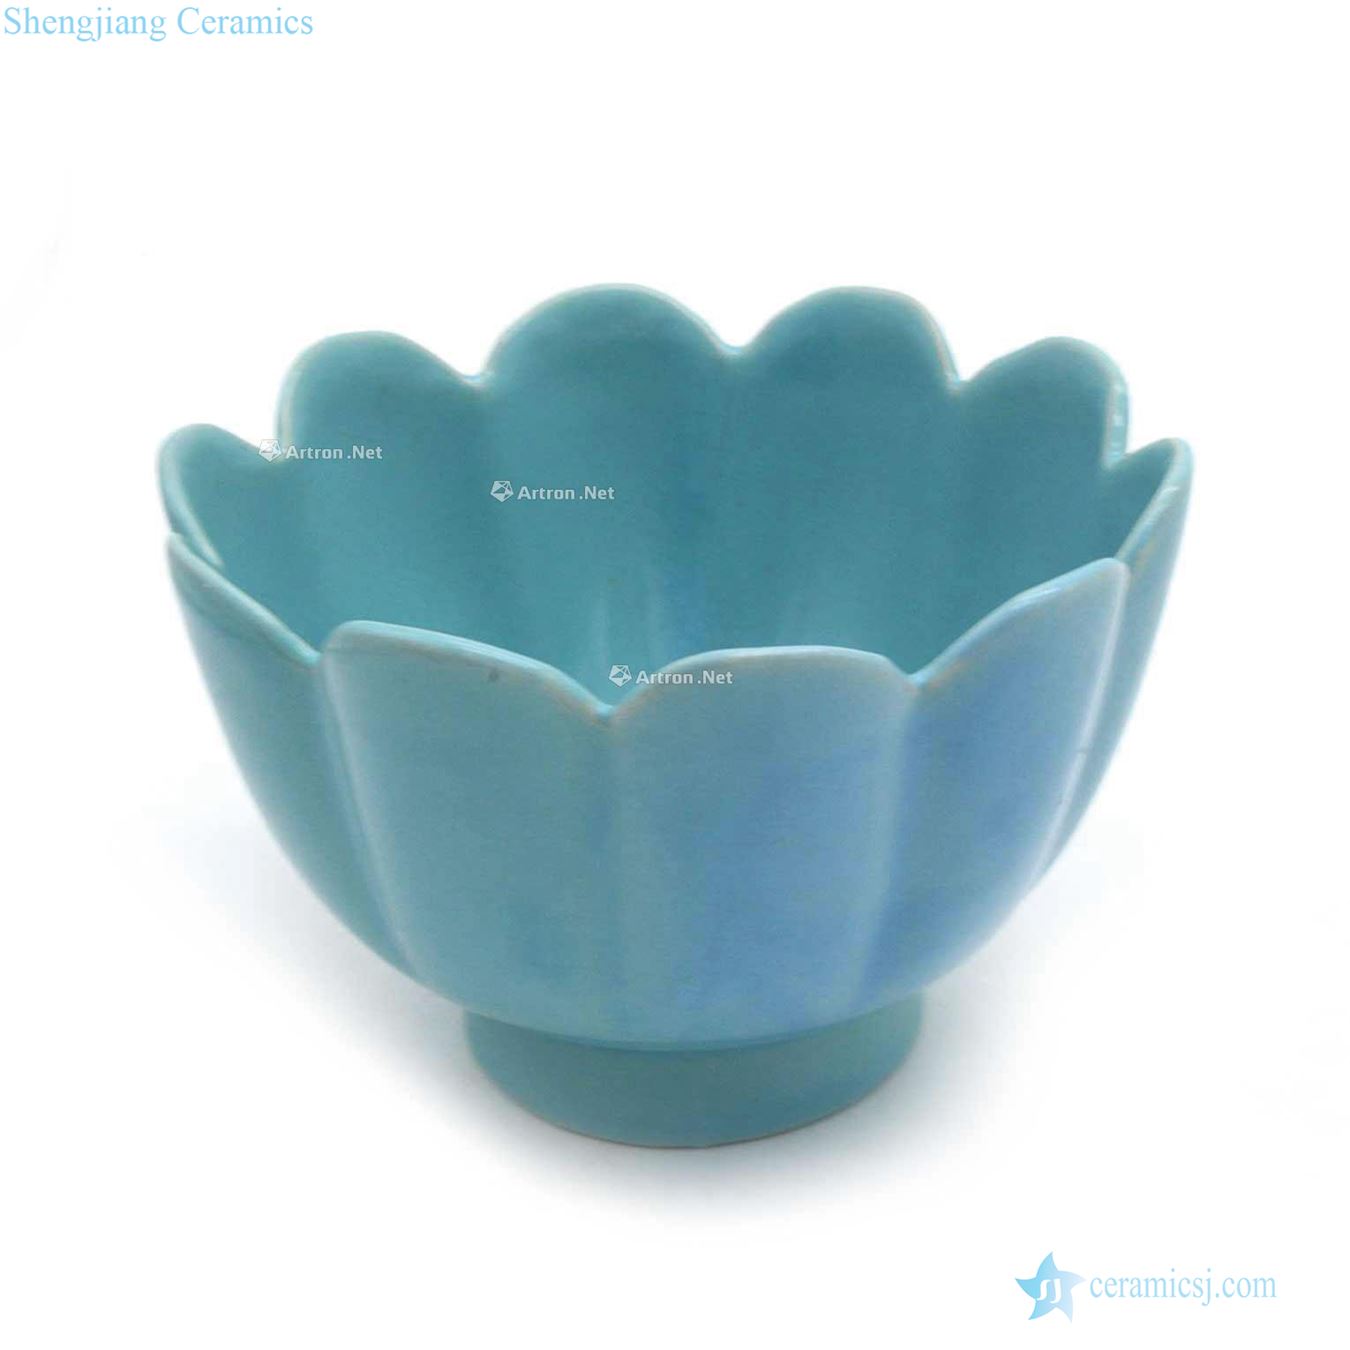 Your kiln azure glaze lotus-shaped bowl